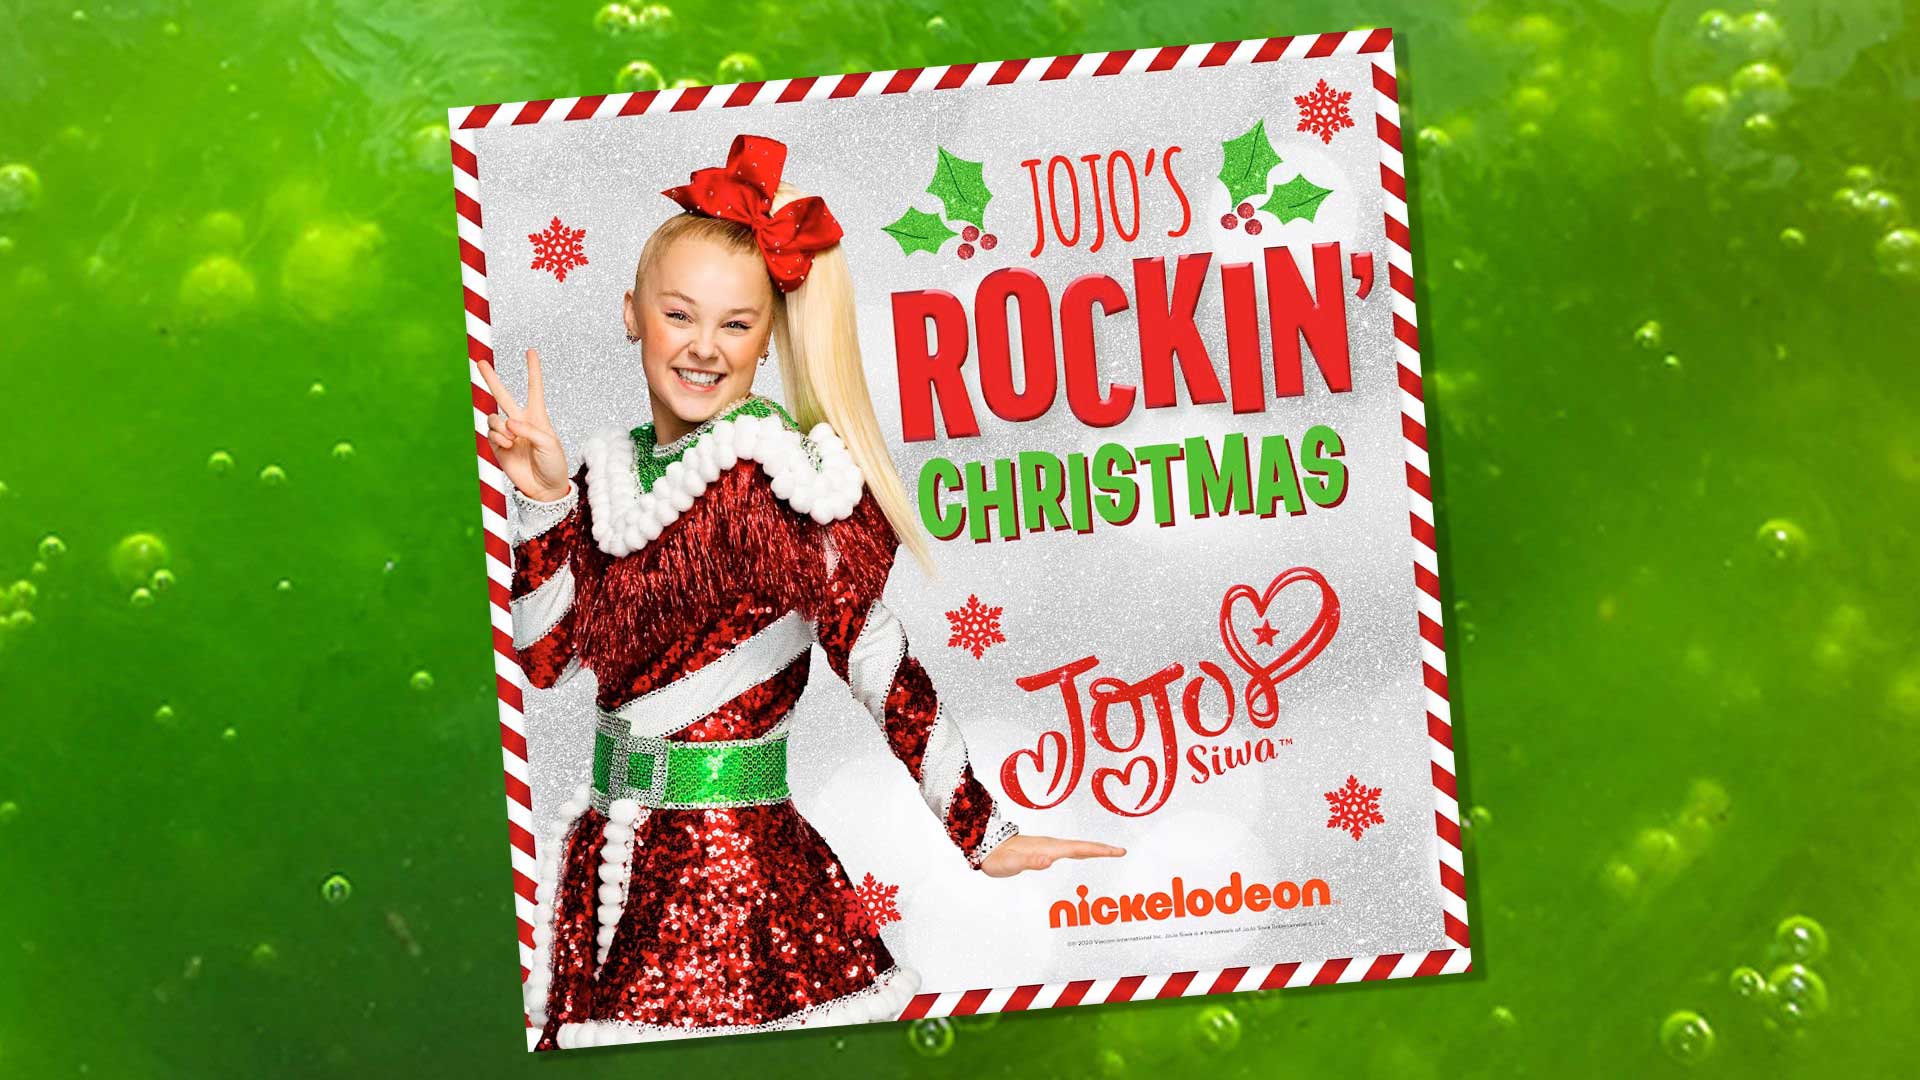 The cover of JoJo Siwa's Christmas album